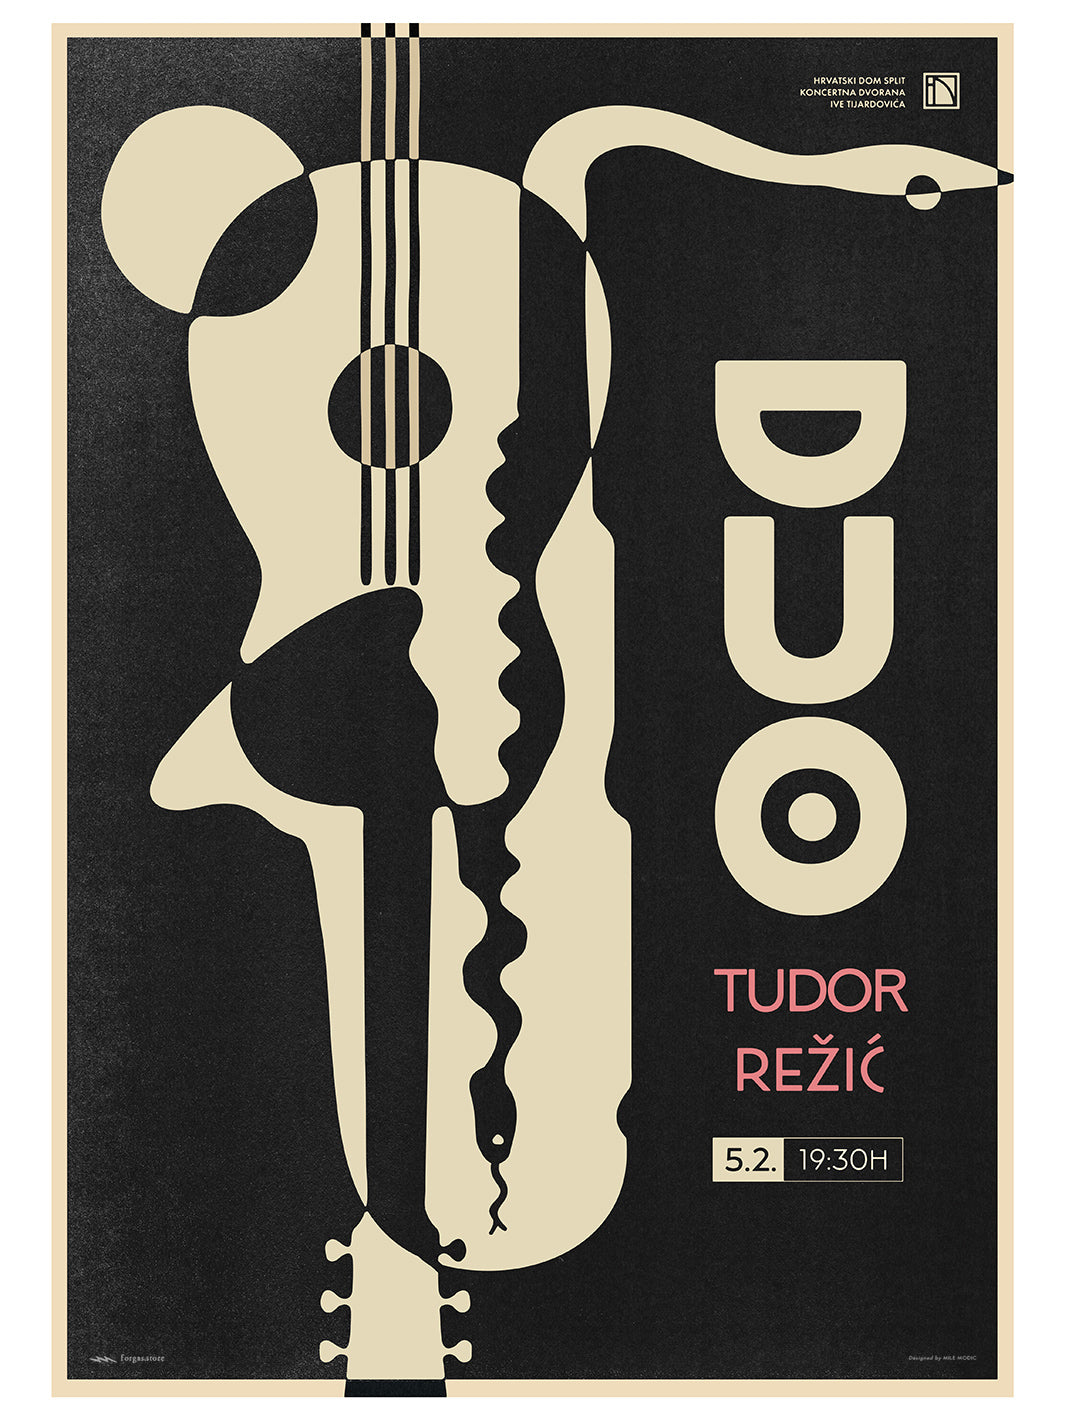 Duo Tudor-Rezic